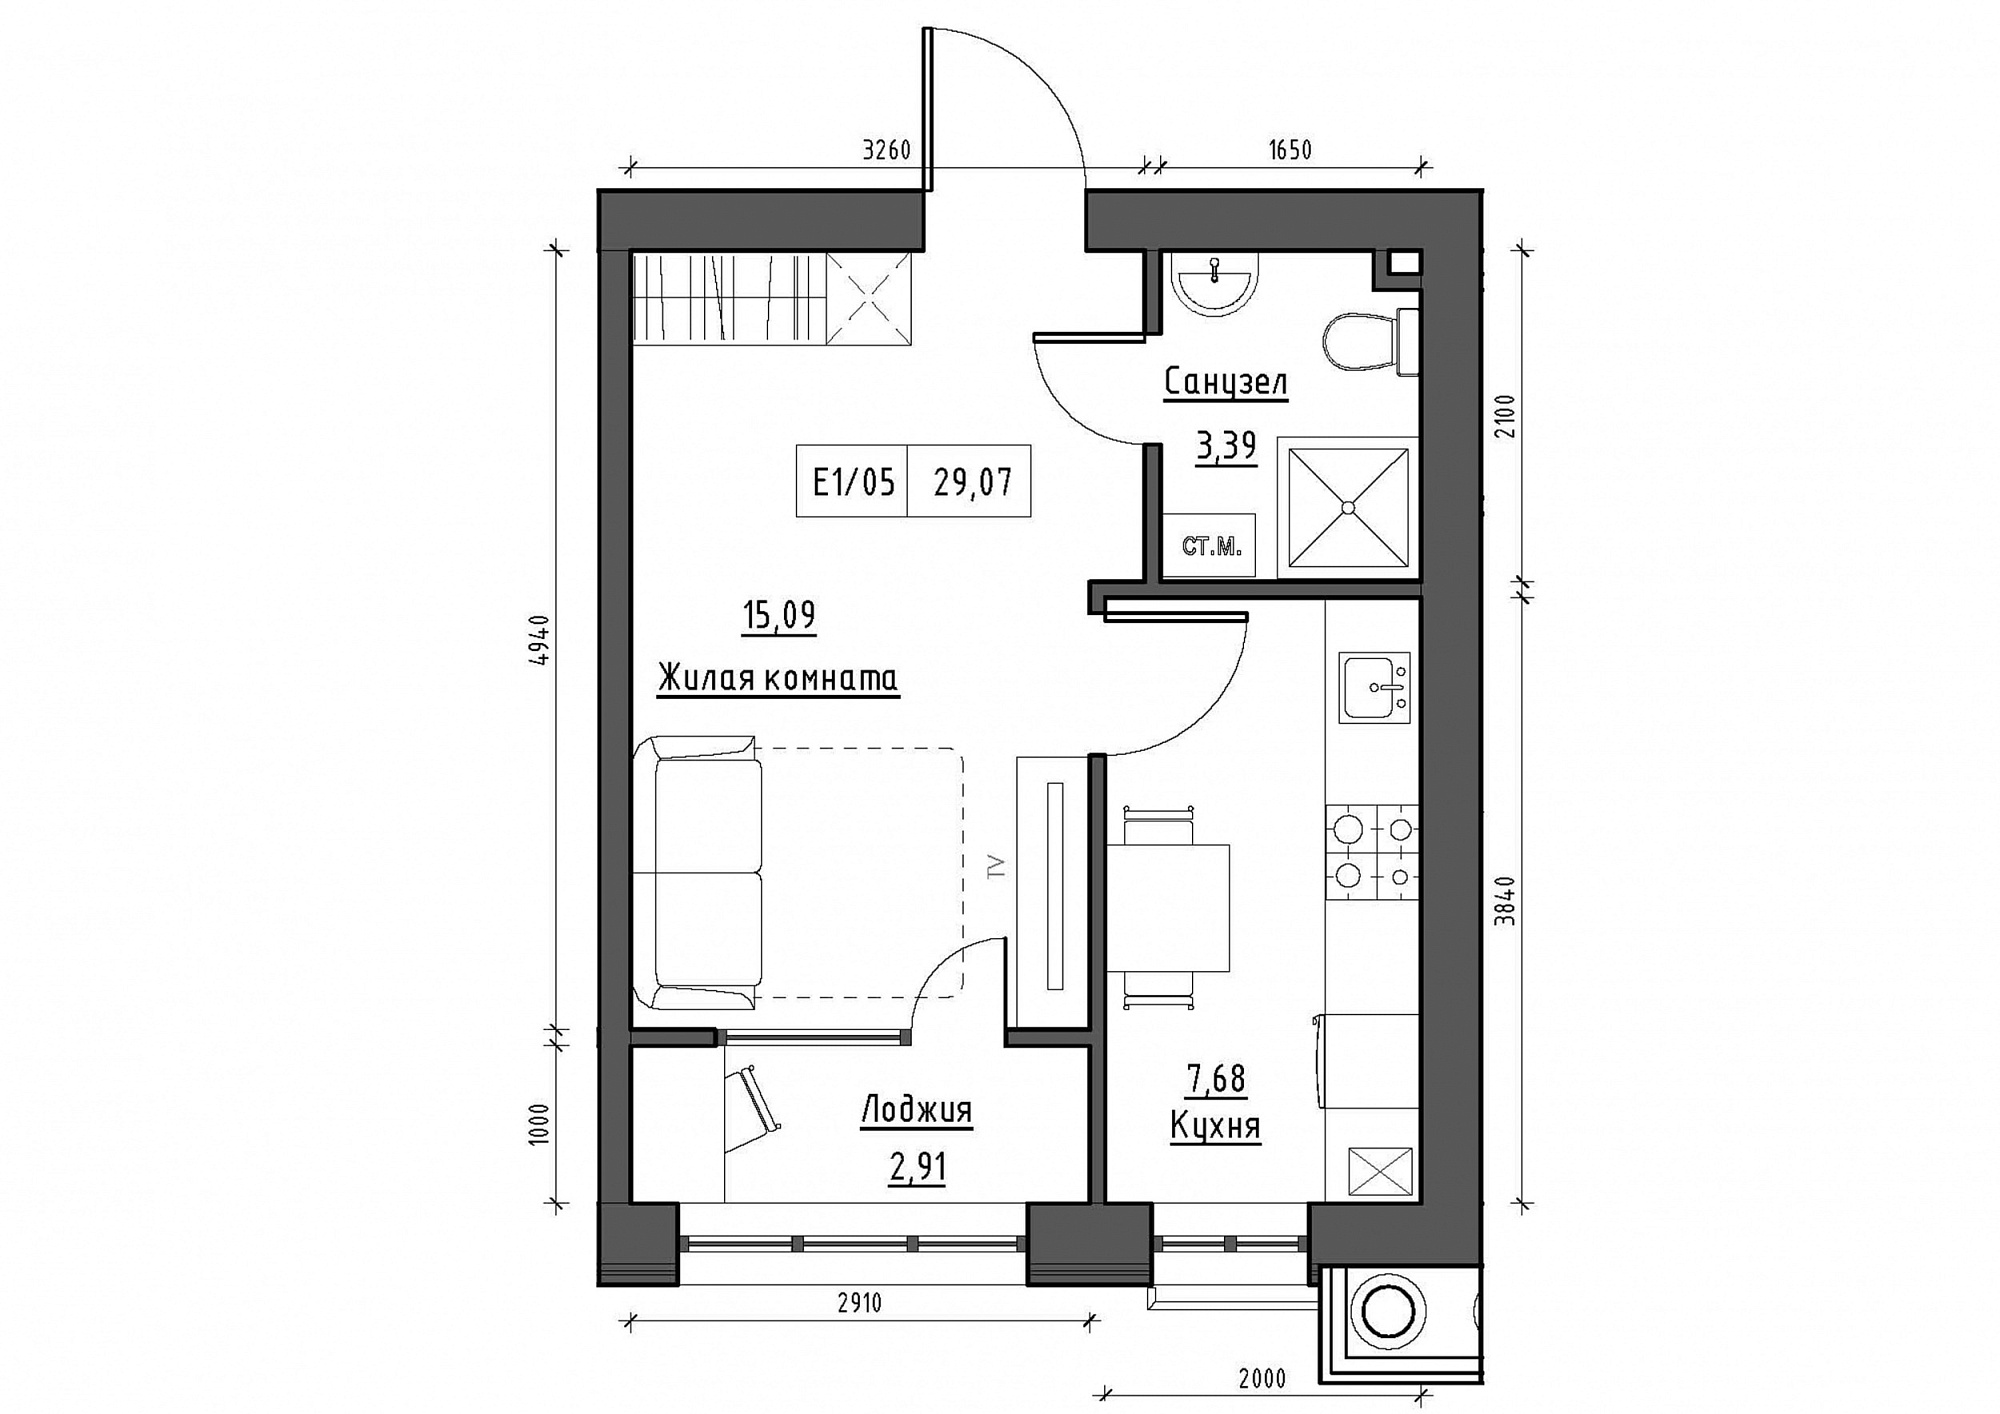 Planning 1-rm flats area 29.07m2, KS-011-03/0009.